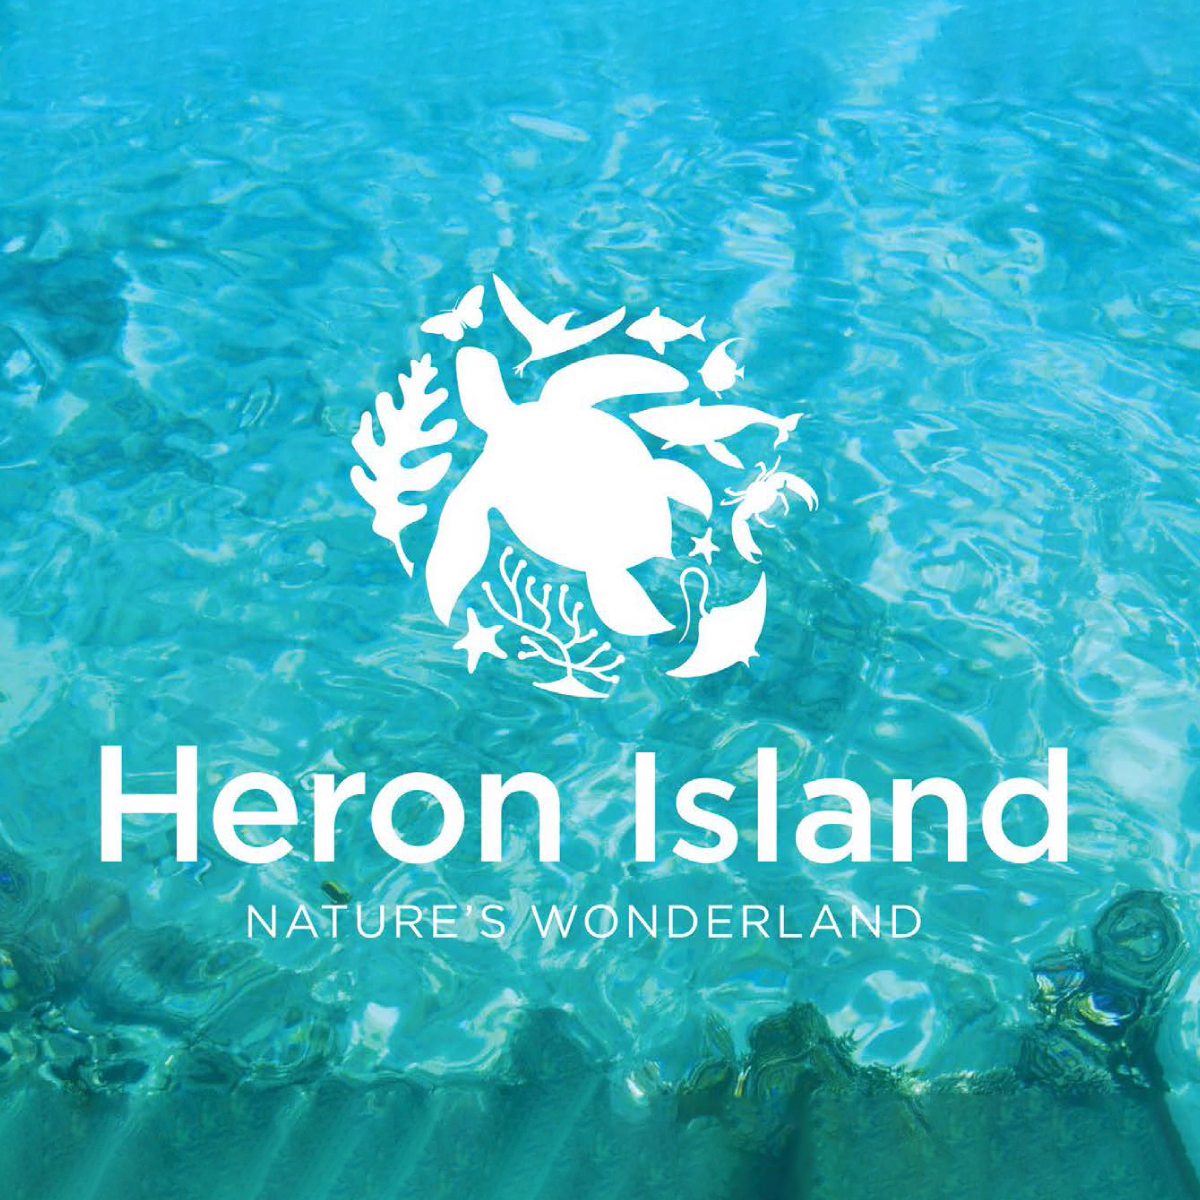 Heron Island Lizard Island Tourism Destination Brand Identity Design